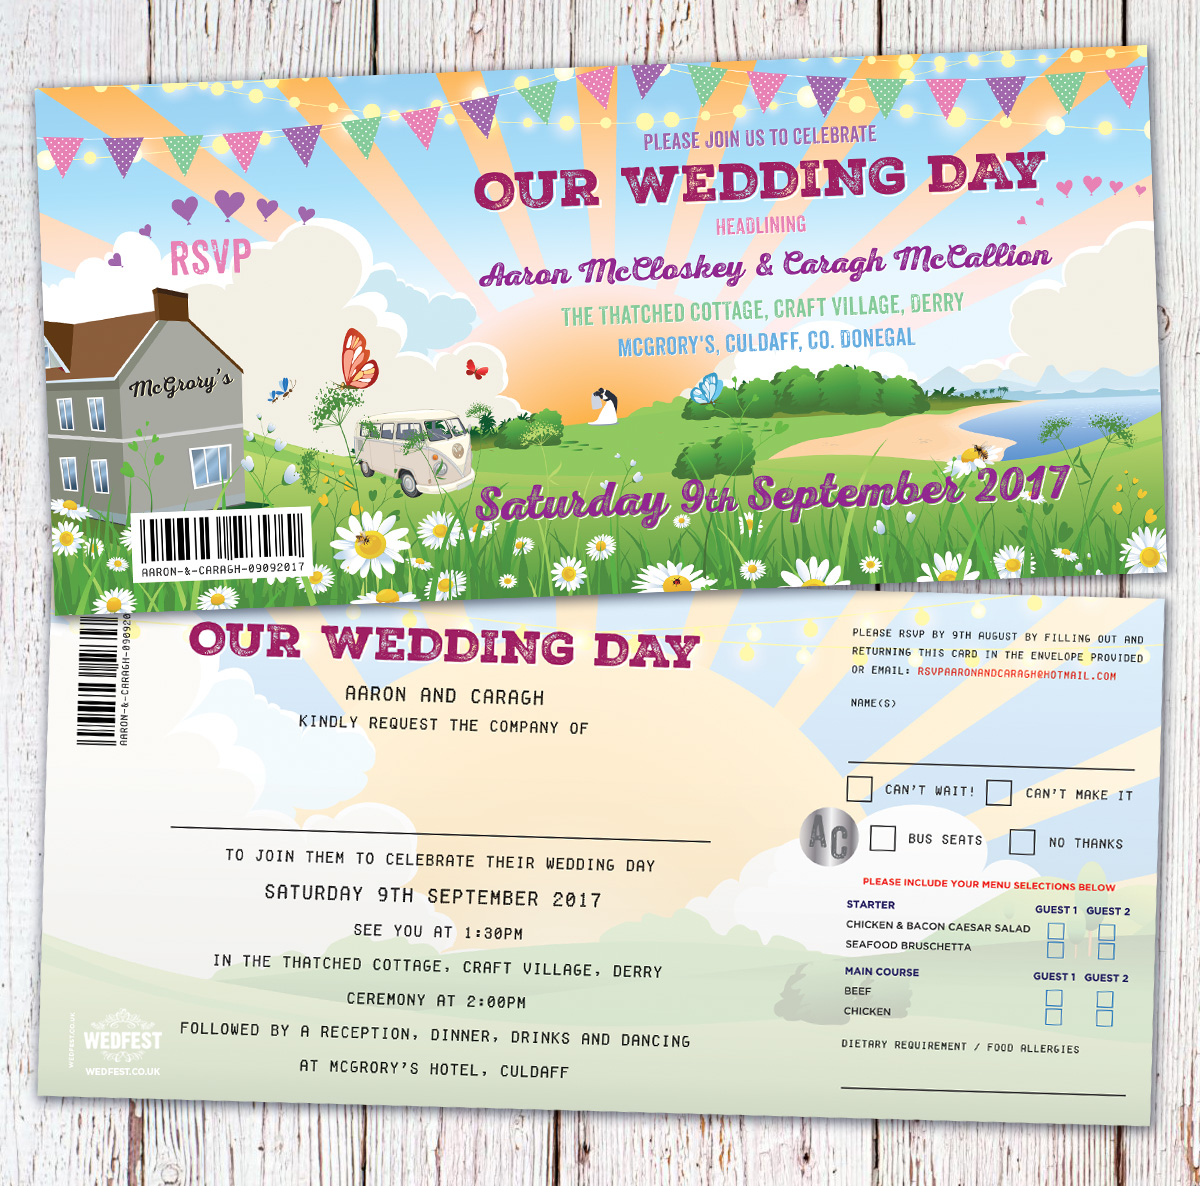 wedfest festival wedding invitations donegal ireland